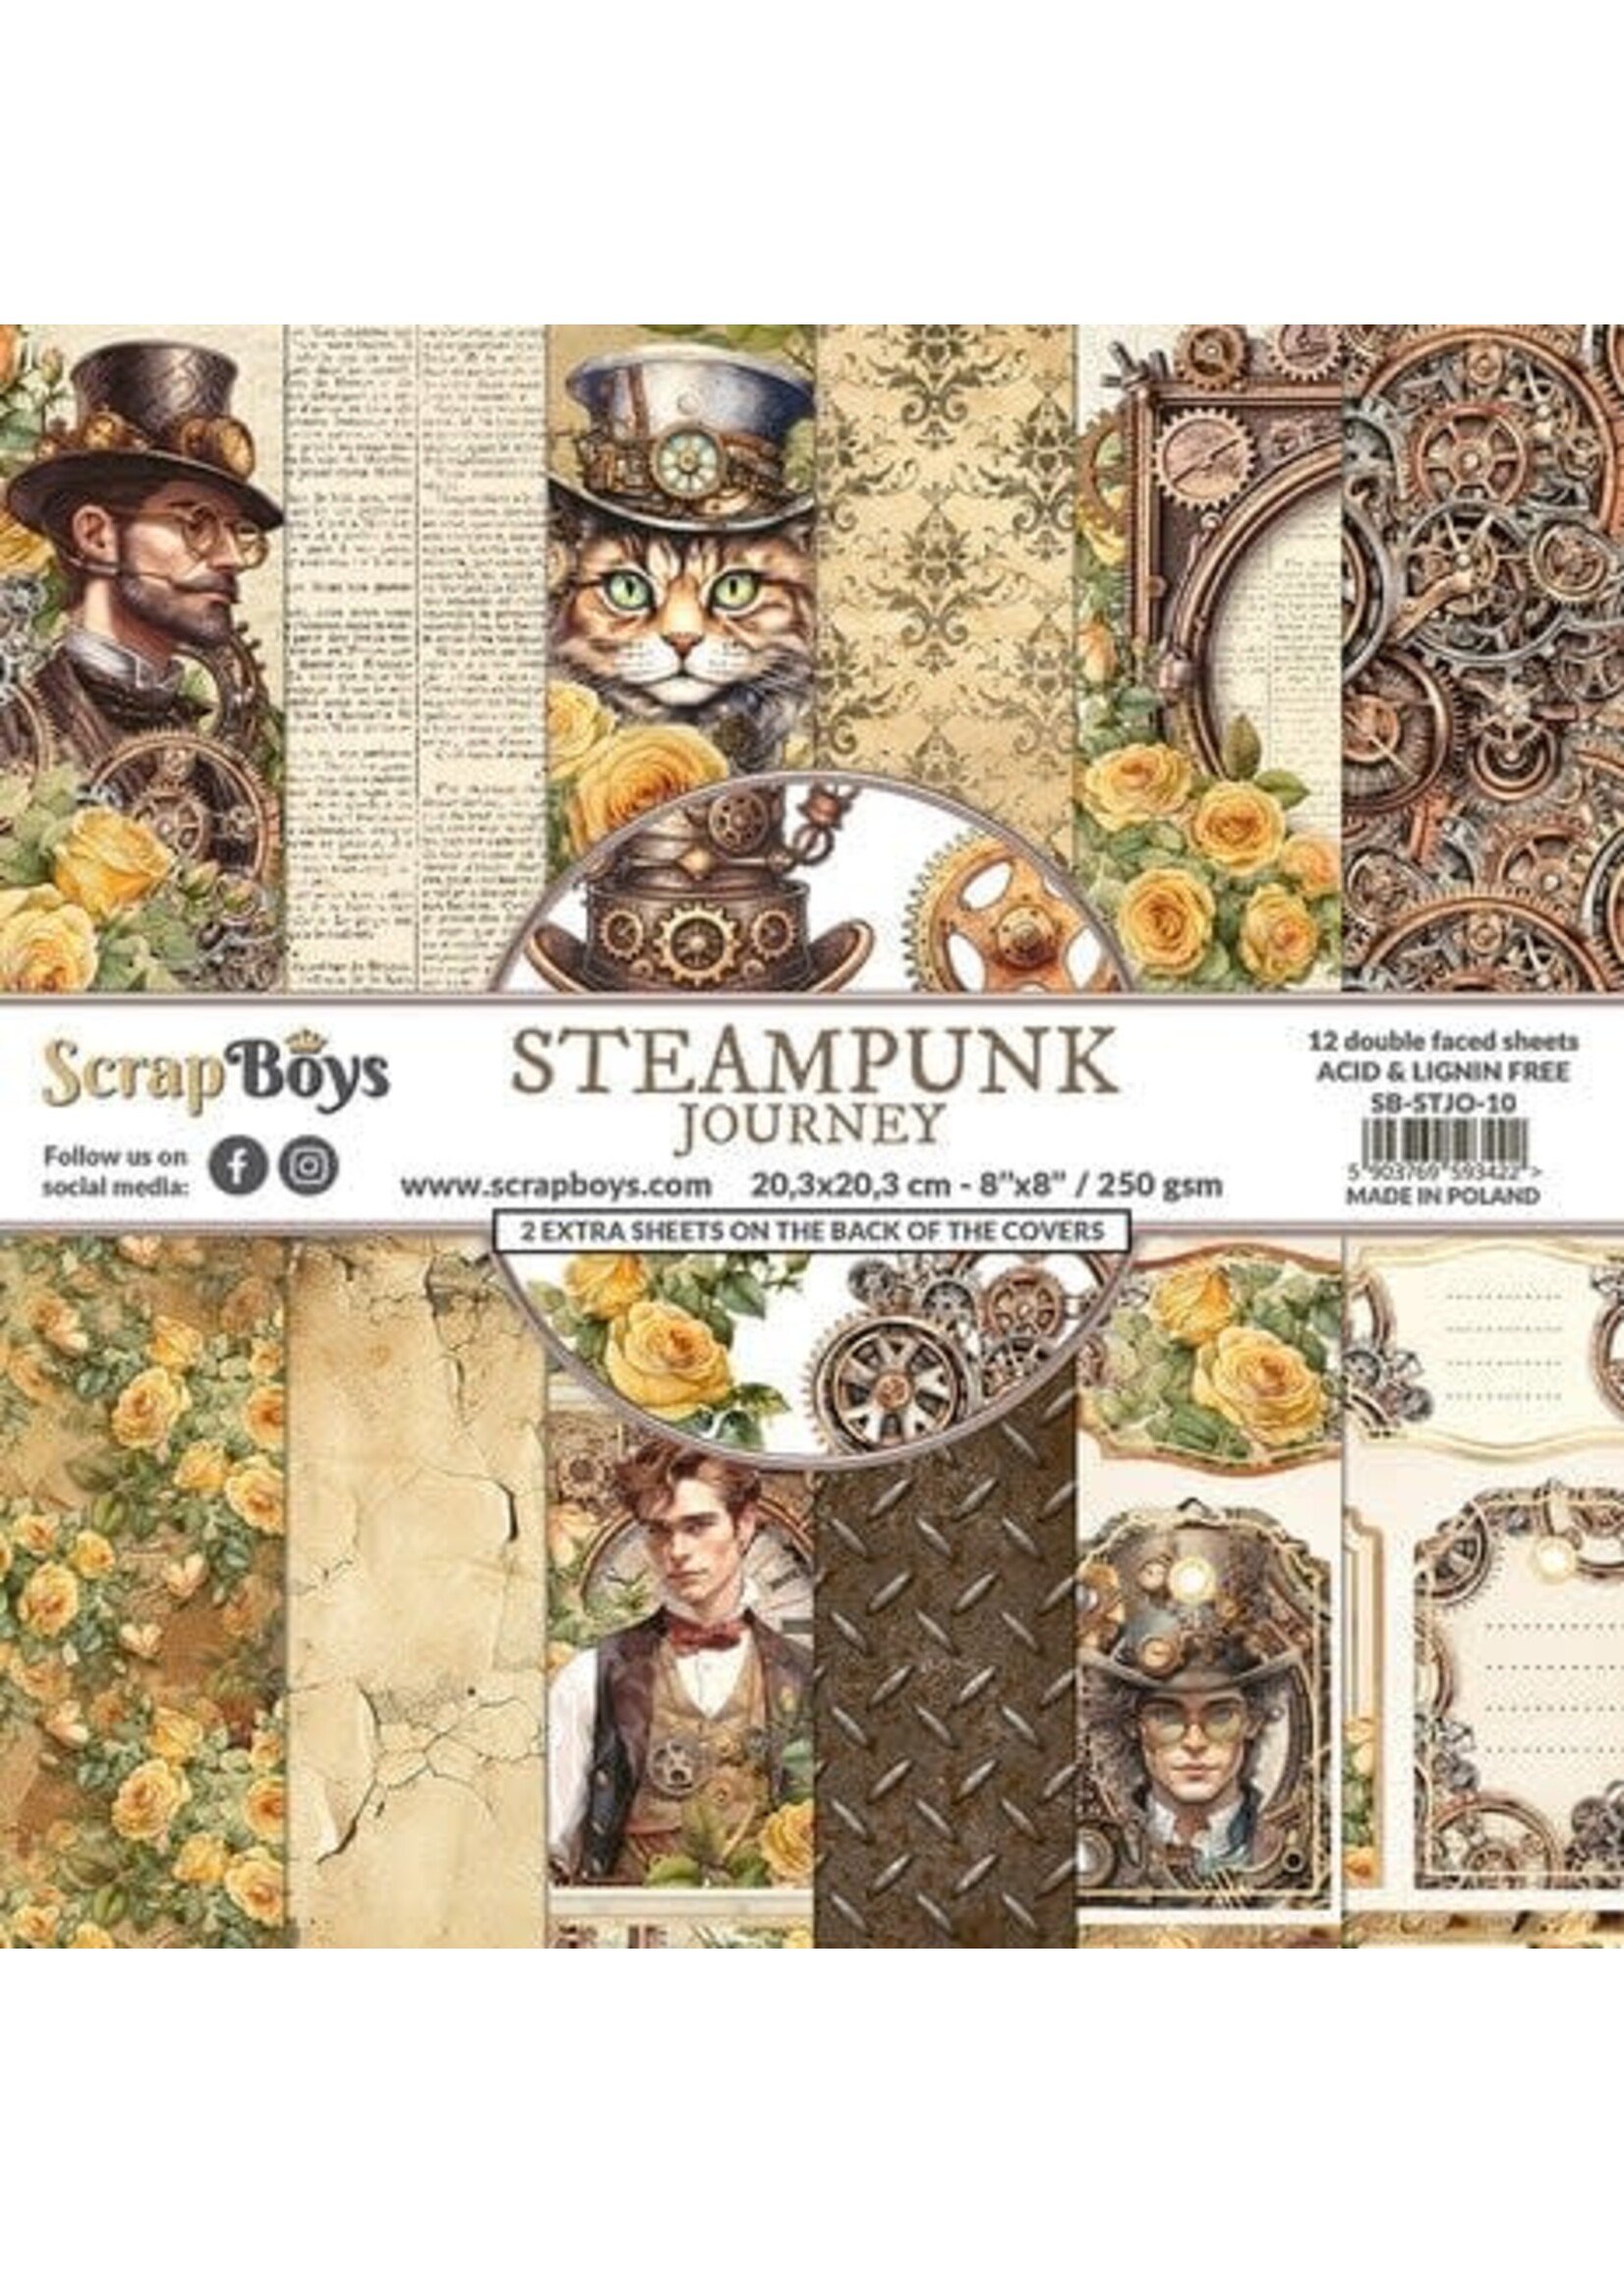 Scrapboys Steampunk Journey 8x8 Inch Paper Pad (SB-STJO-10)